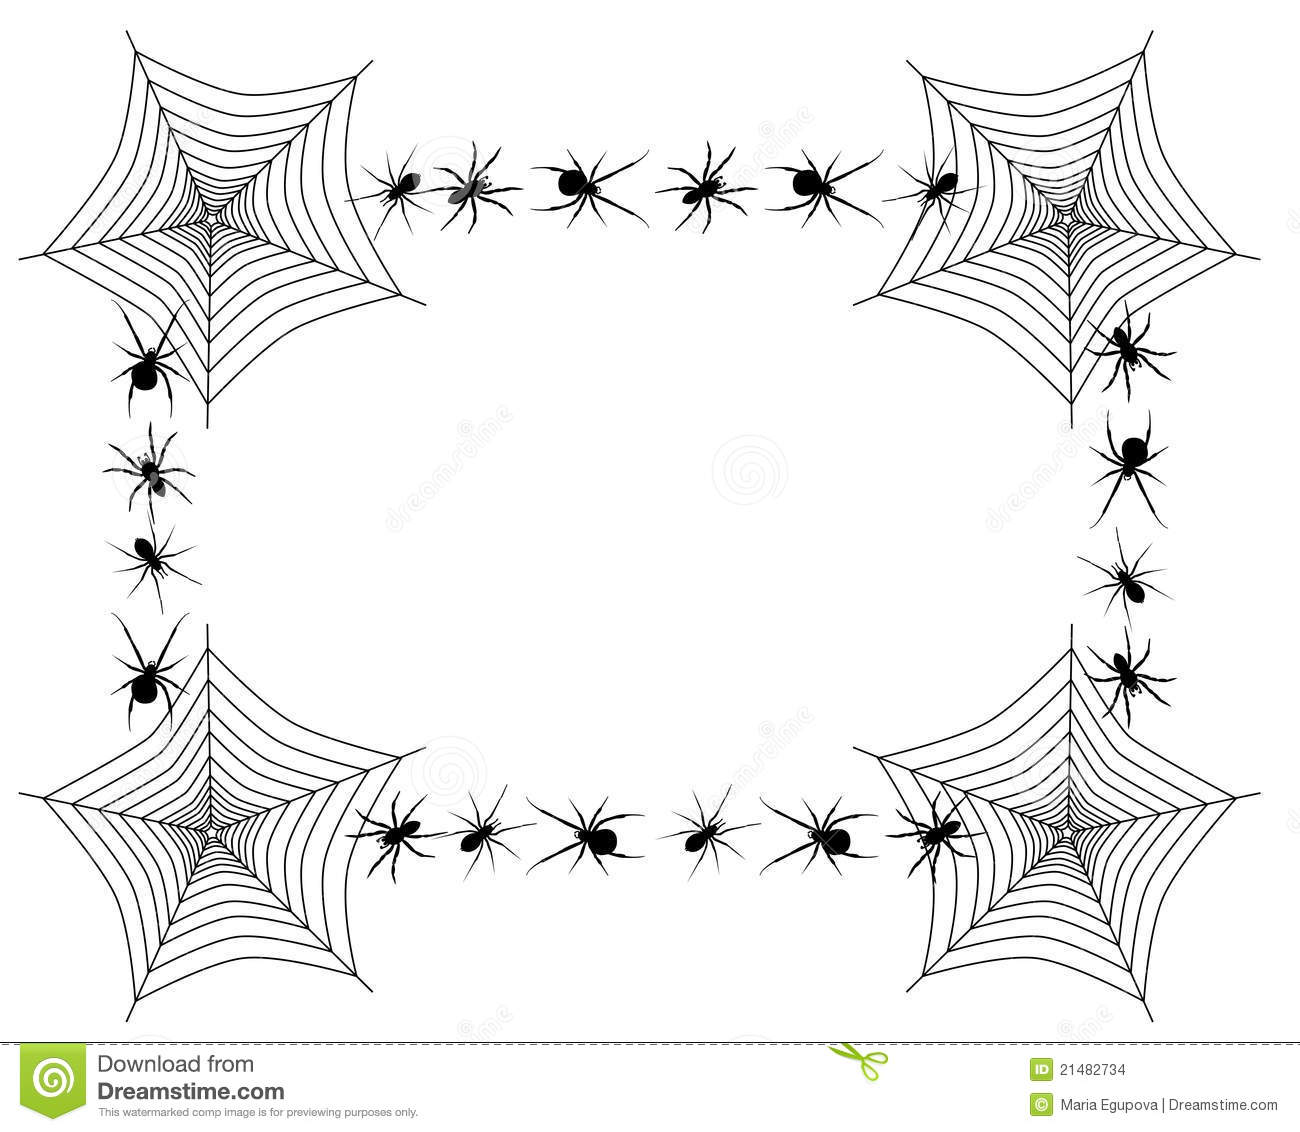 Spider Web Border